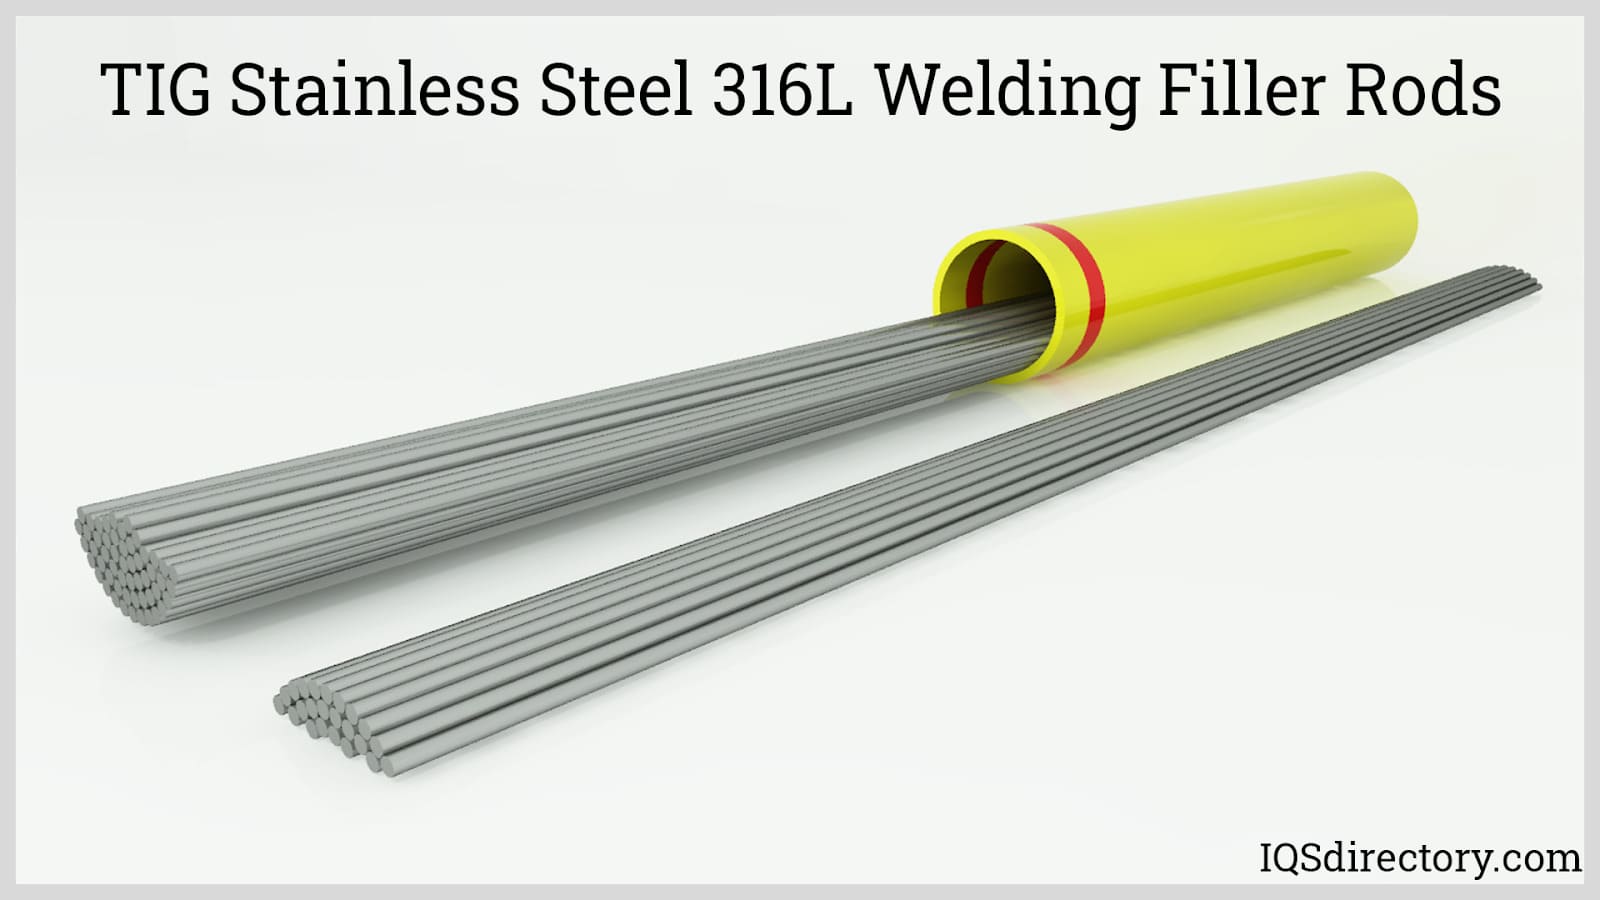 TIG Stainless Steel 316L Welding Filler Rods